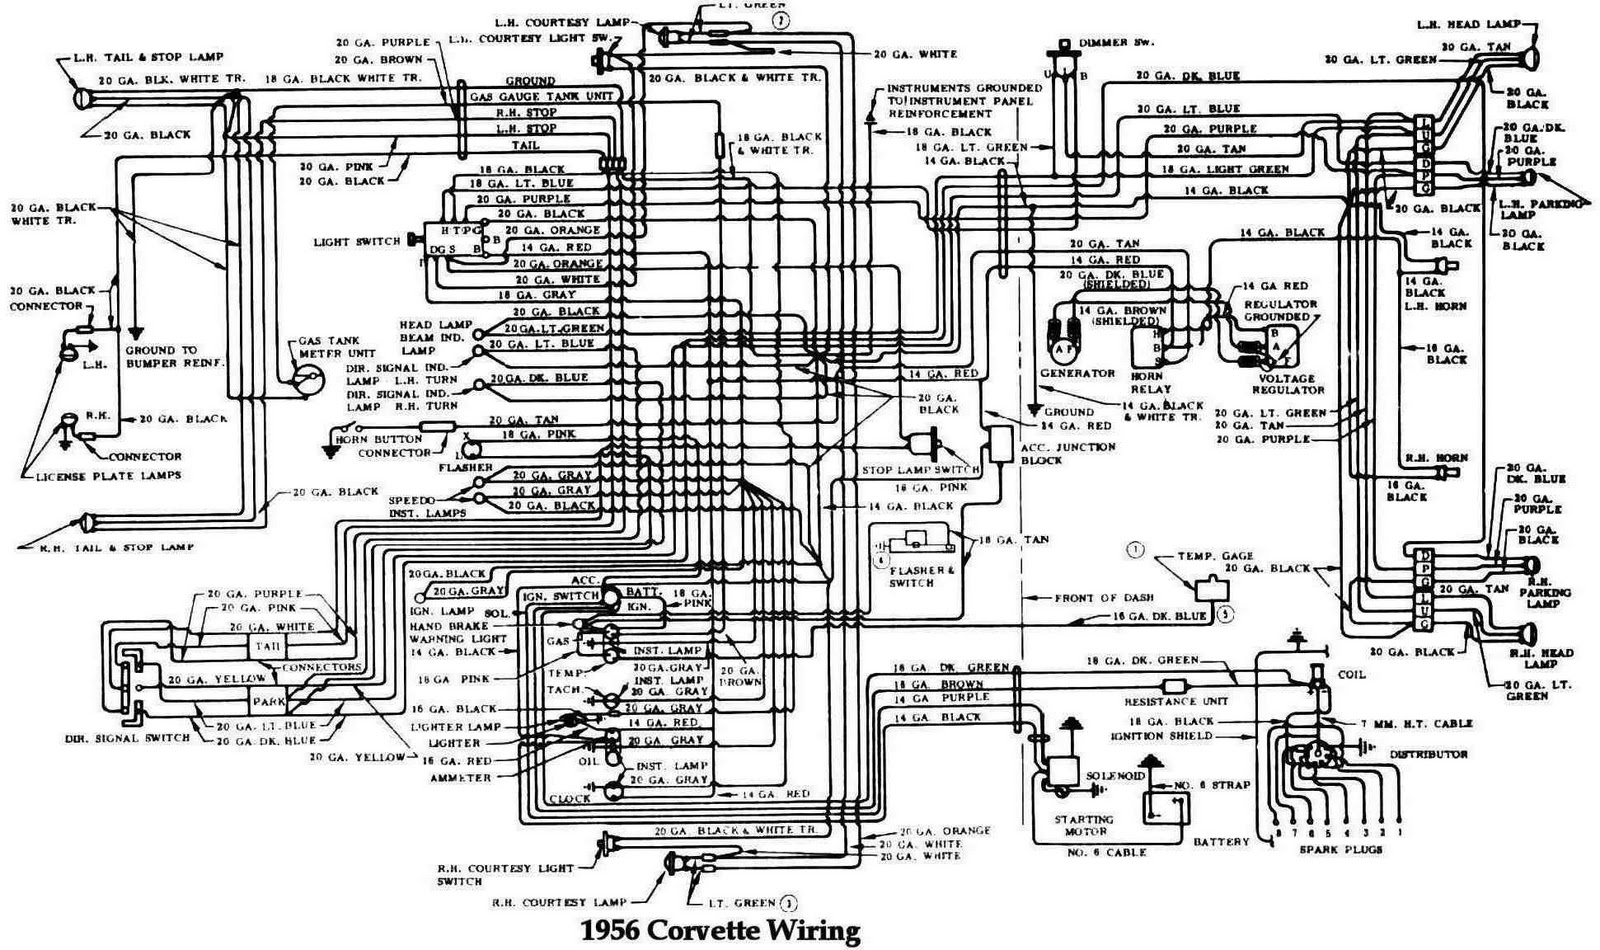 56 Mercury Wiring Diagram - Wiring Diagram Data Oreo - Mercury Outboard Wiring Diagram Schematic